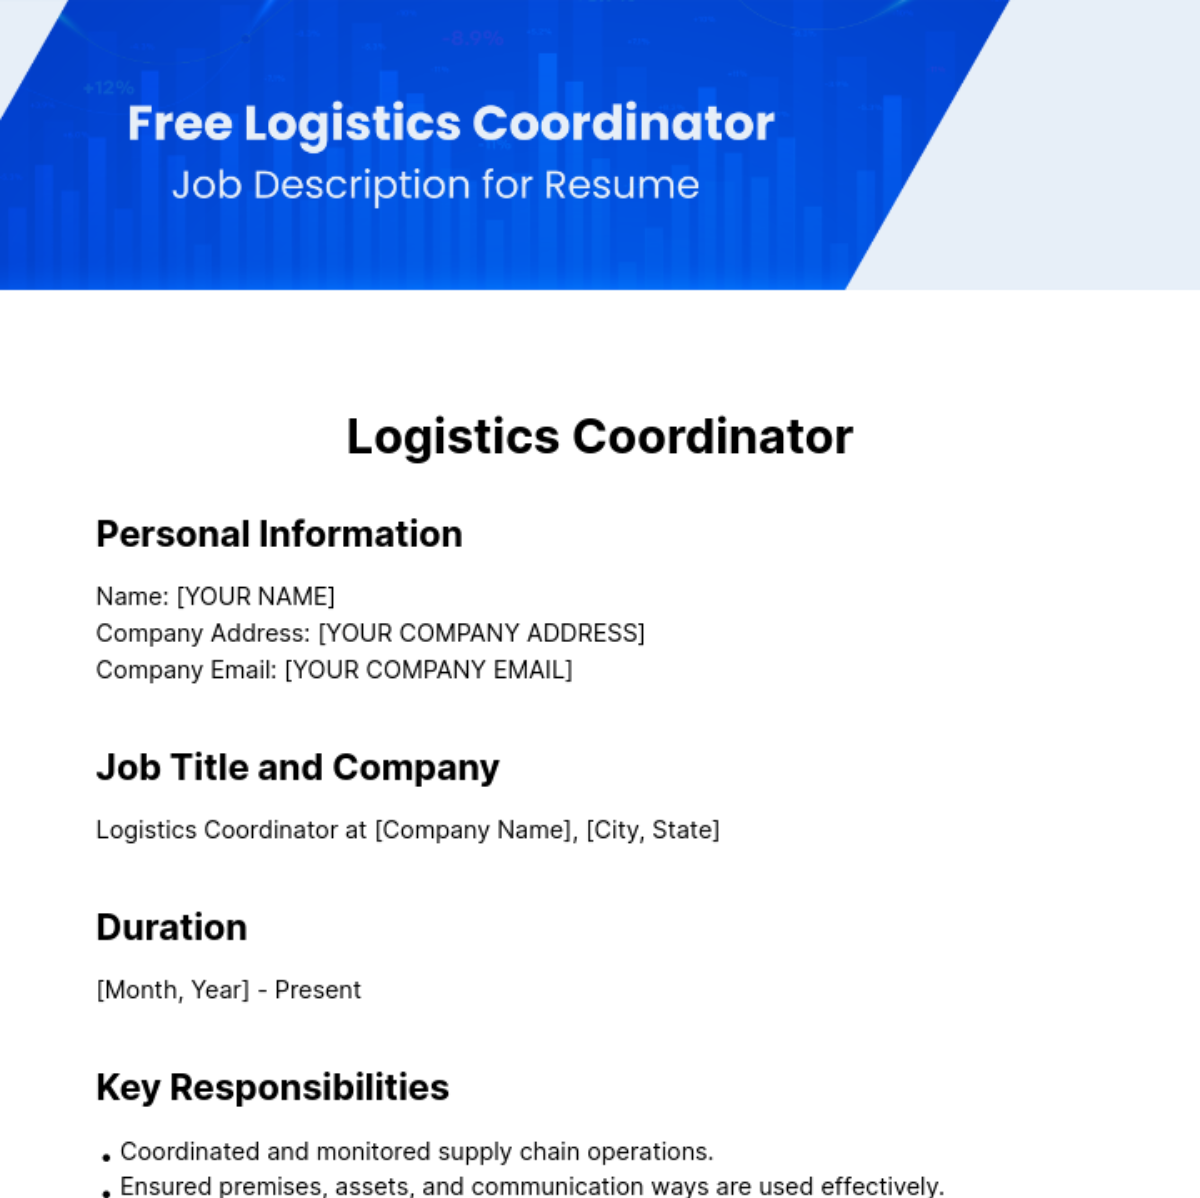 Logistics Coordinator Job Description for Resume Template